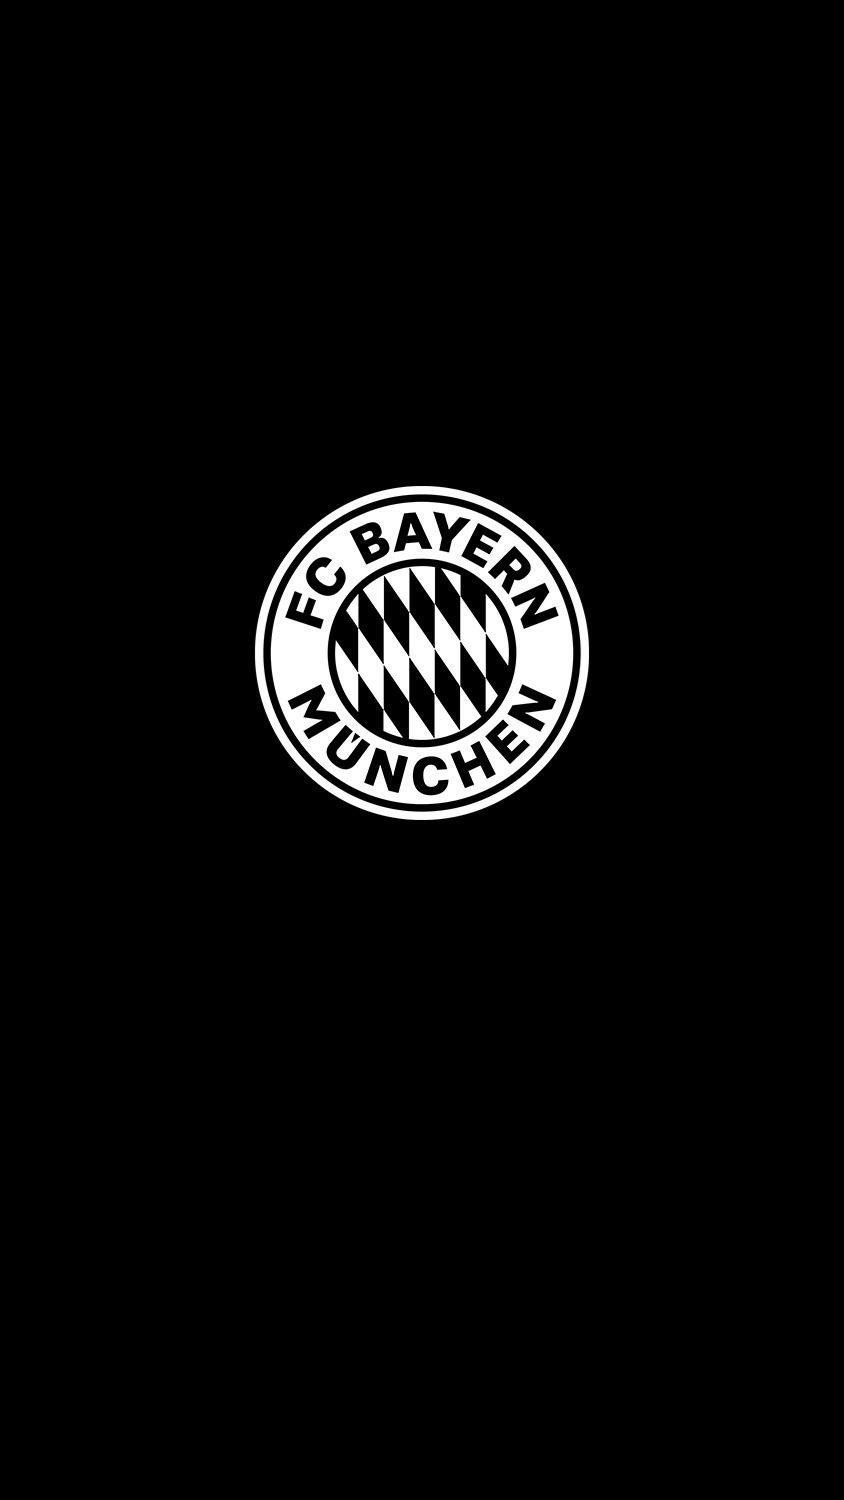 Bayern Munich Black And White Logo Wallpapers Wallpaper Cave